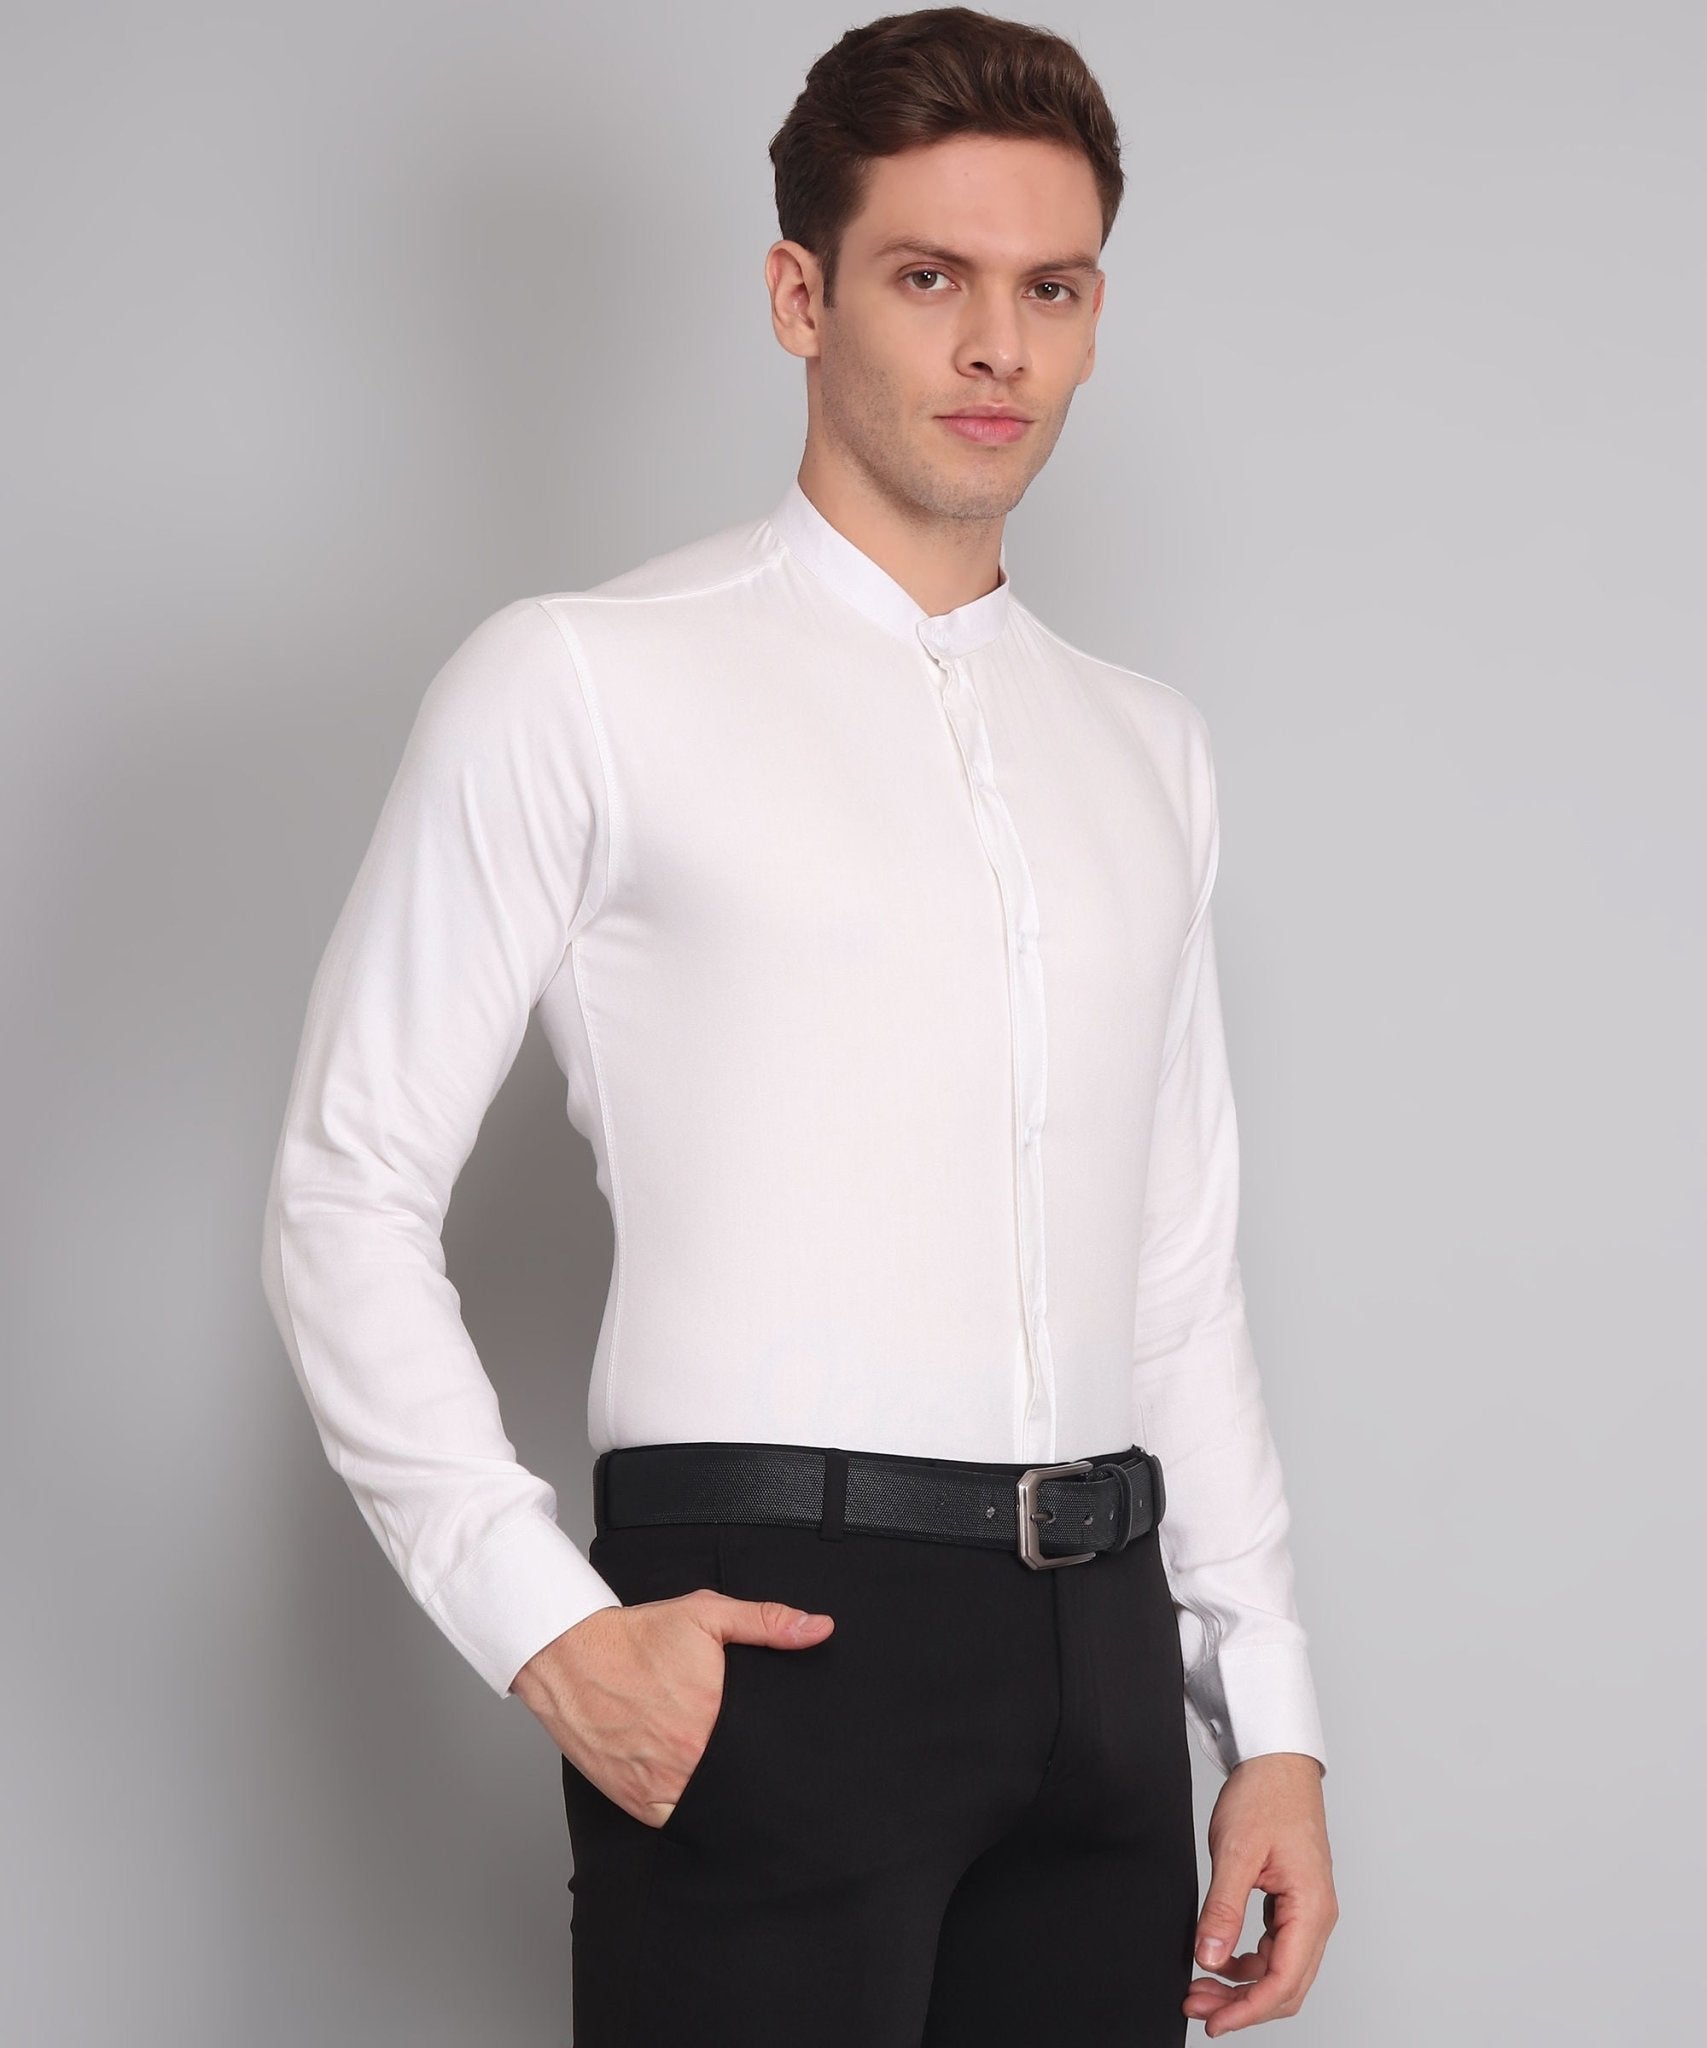 TryBuy Premium Luxurious Full Sleeves Mandarin Collar White Cotton Casual Shirt for Men - TryBuy® USA🇺🇸